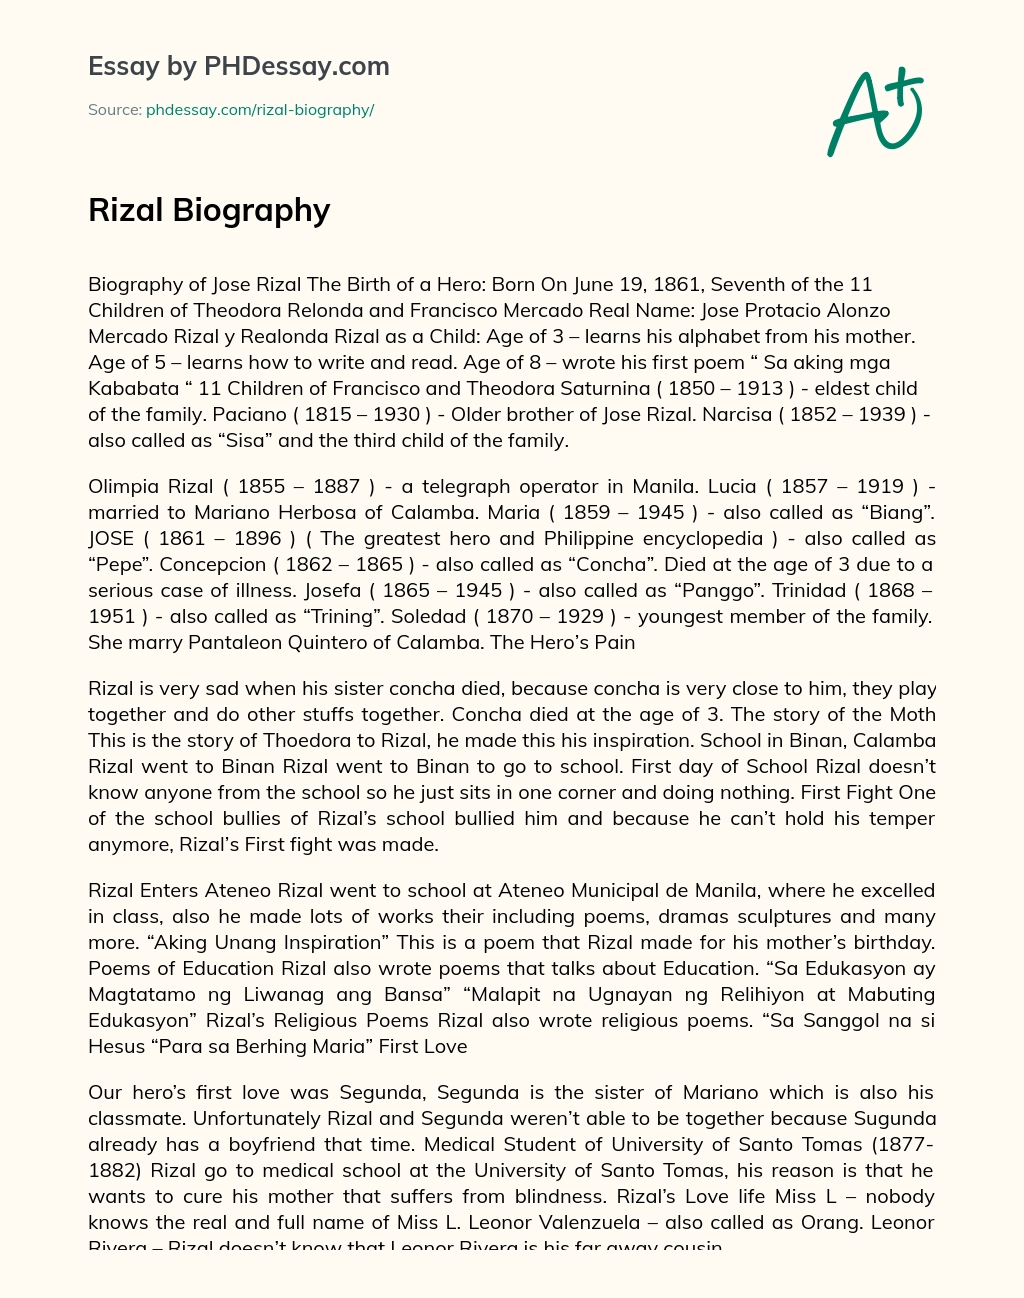 Rizal Biography essay